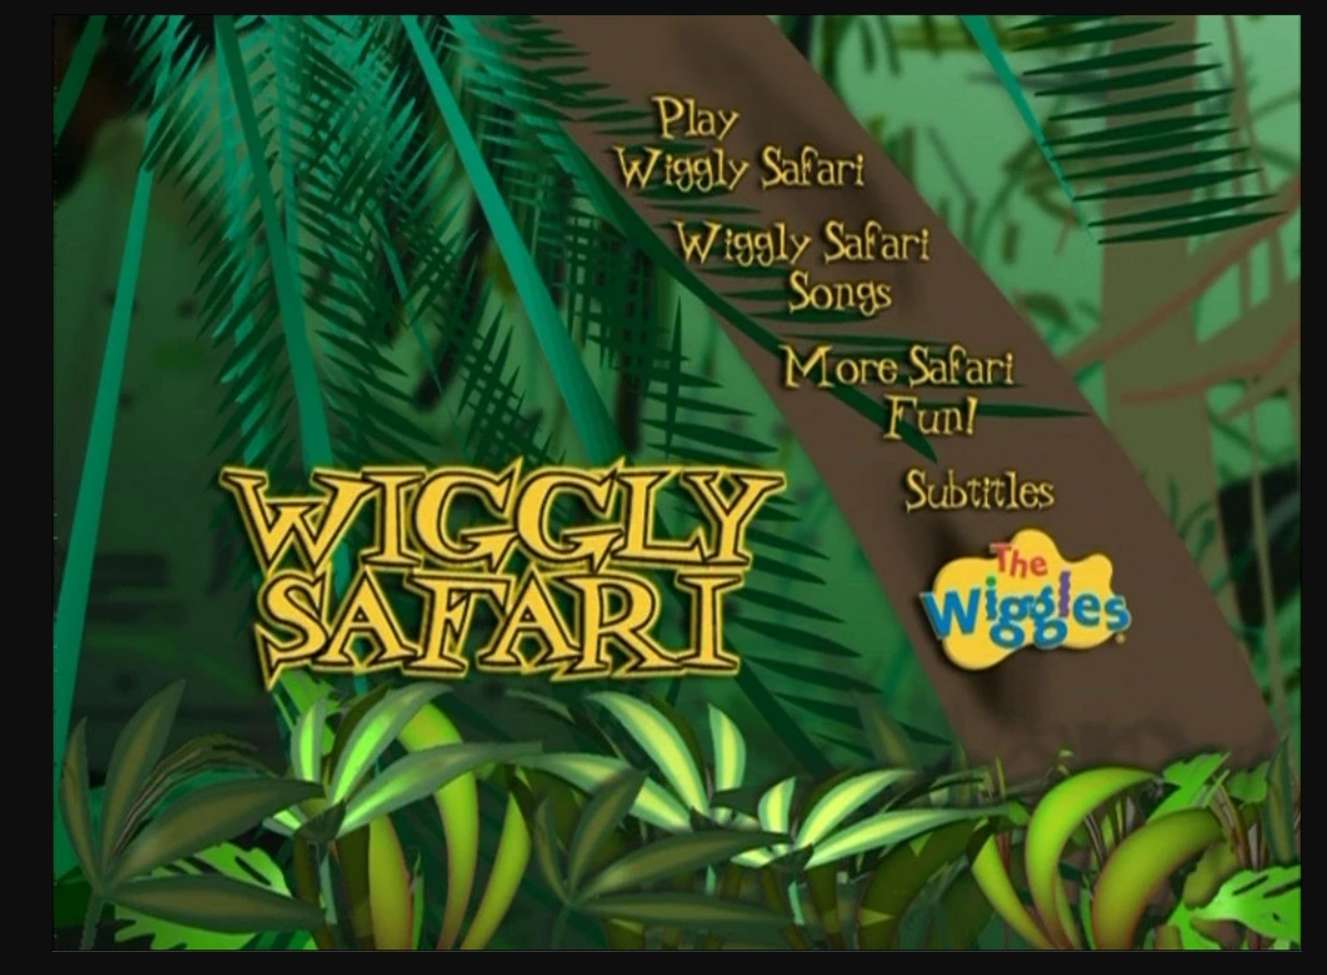 Wiggly Safari DVD メニュー 2000 オンラインパズル